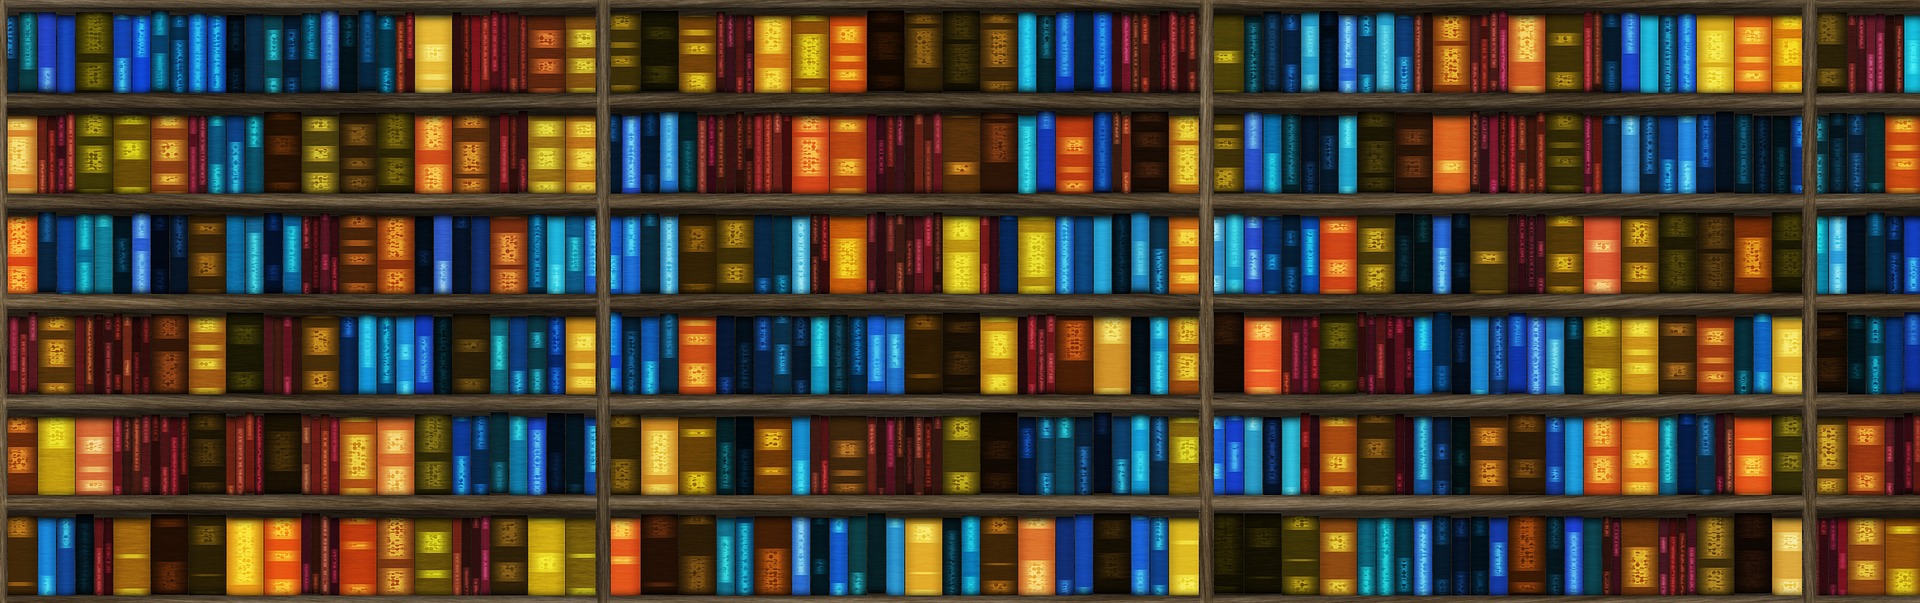 A Bookshelf